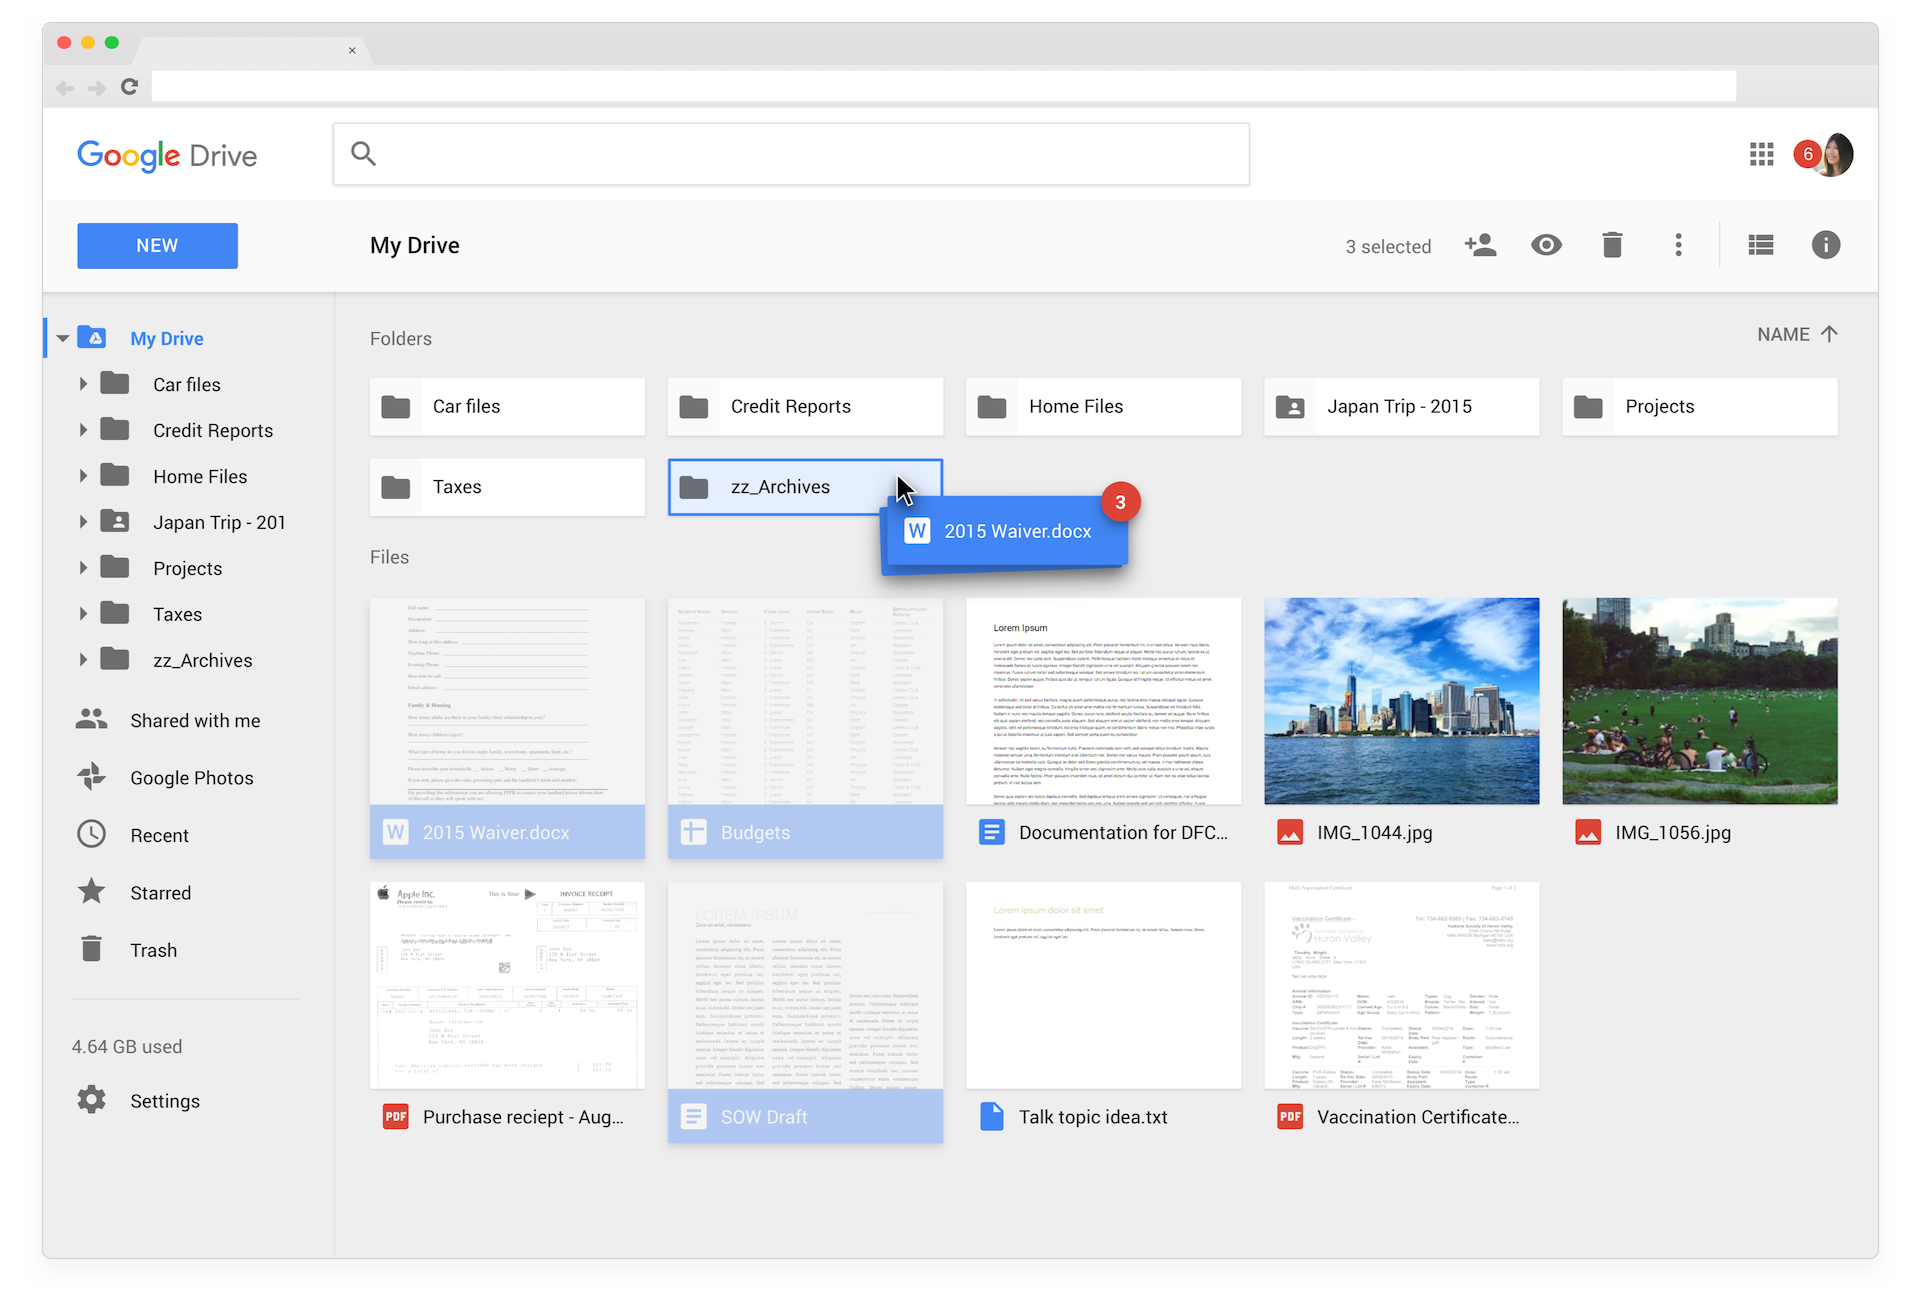 Google Drive - Selection & Organization